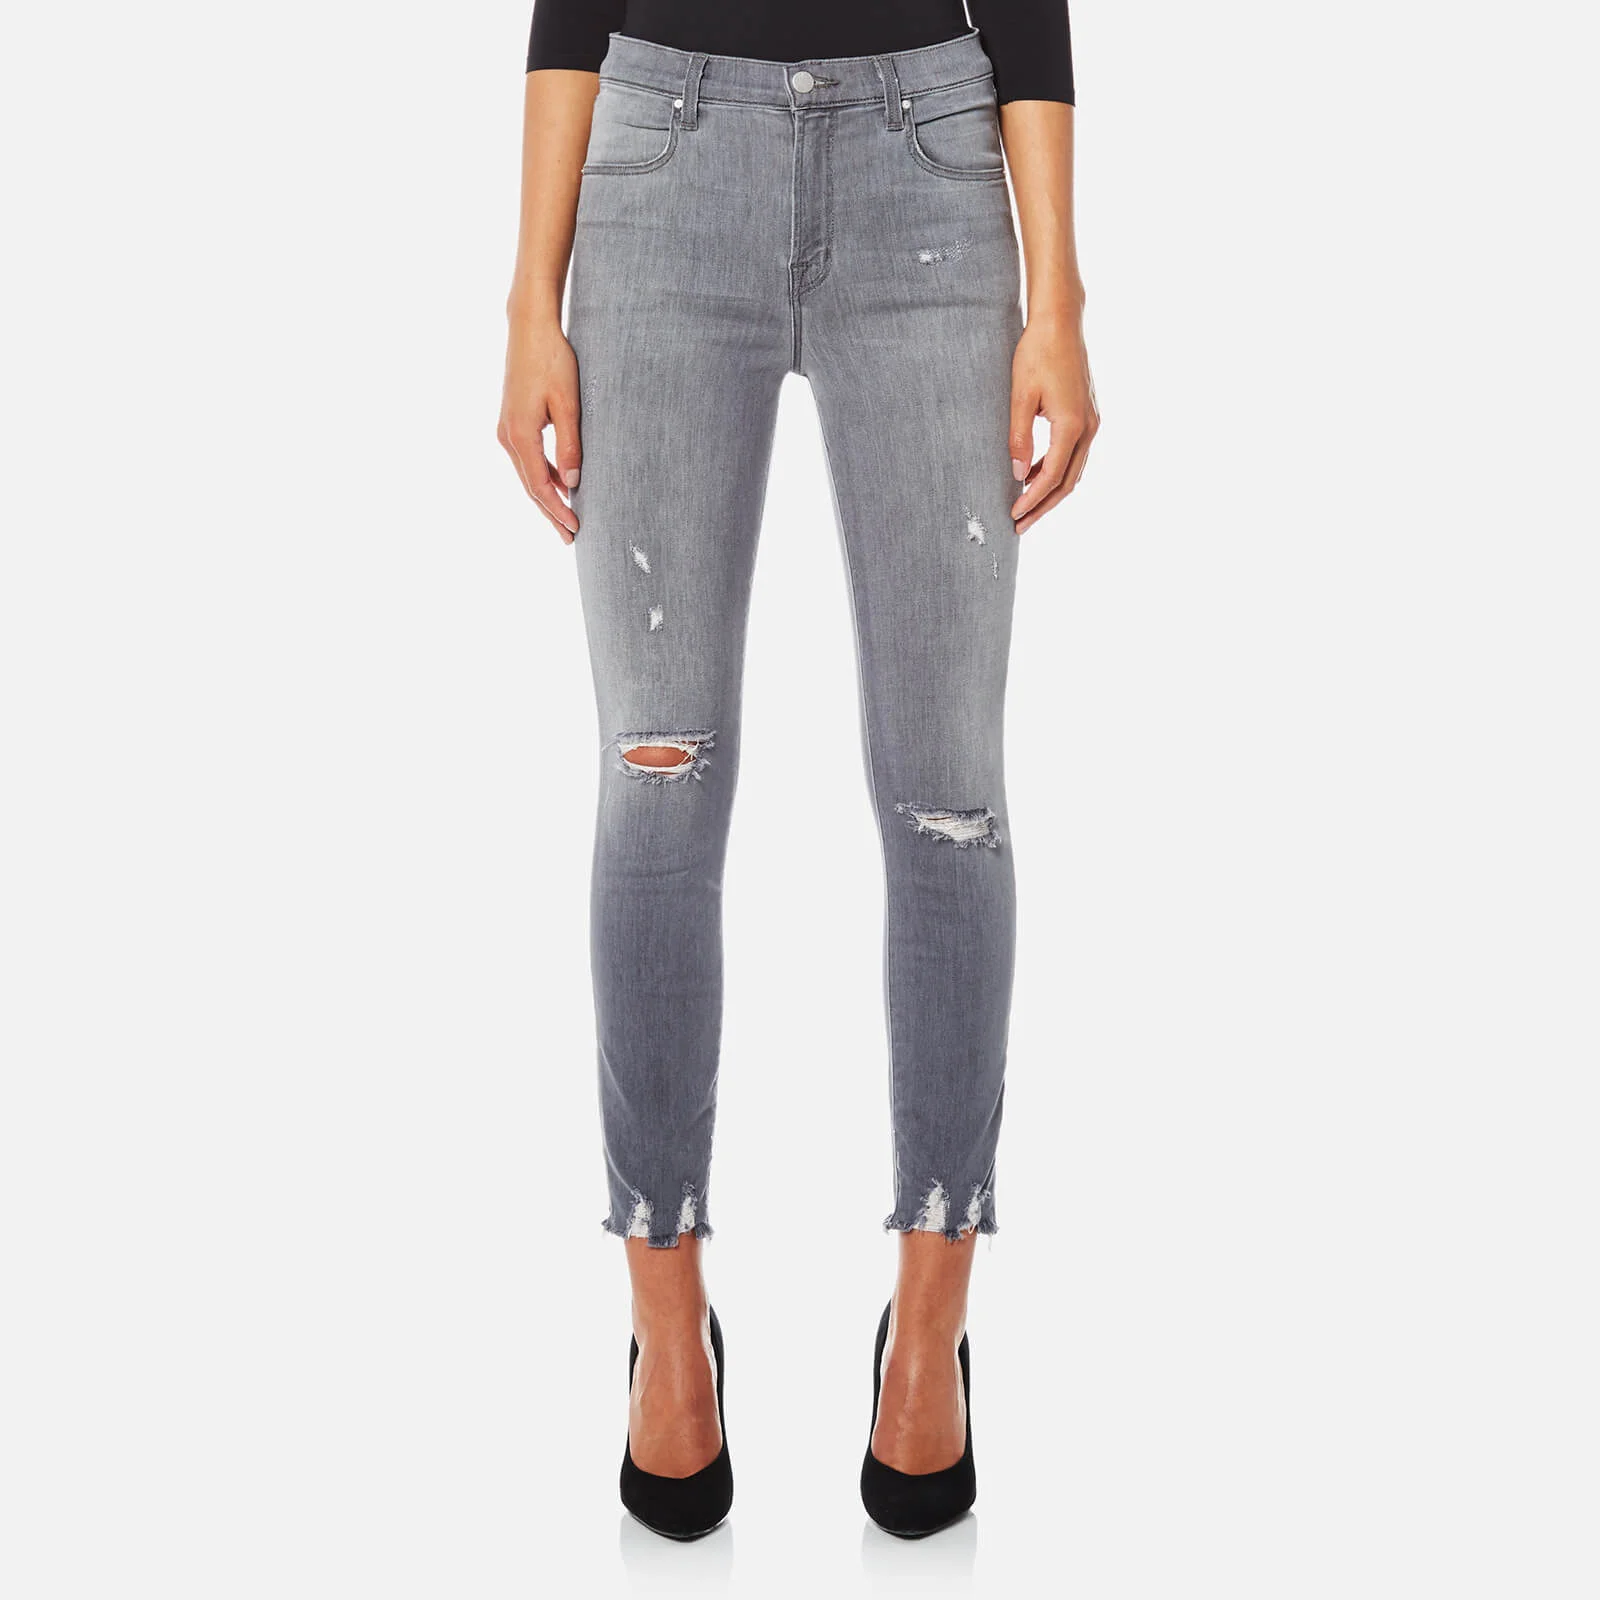 J Brand Women's Alana High Rise Crop Skinny Jeans - Provocateur Destruct Image 1